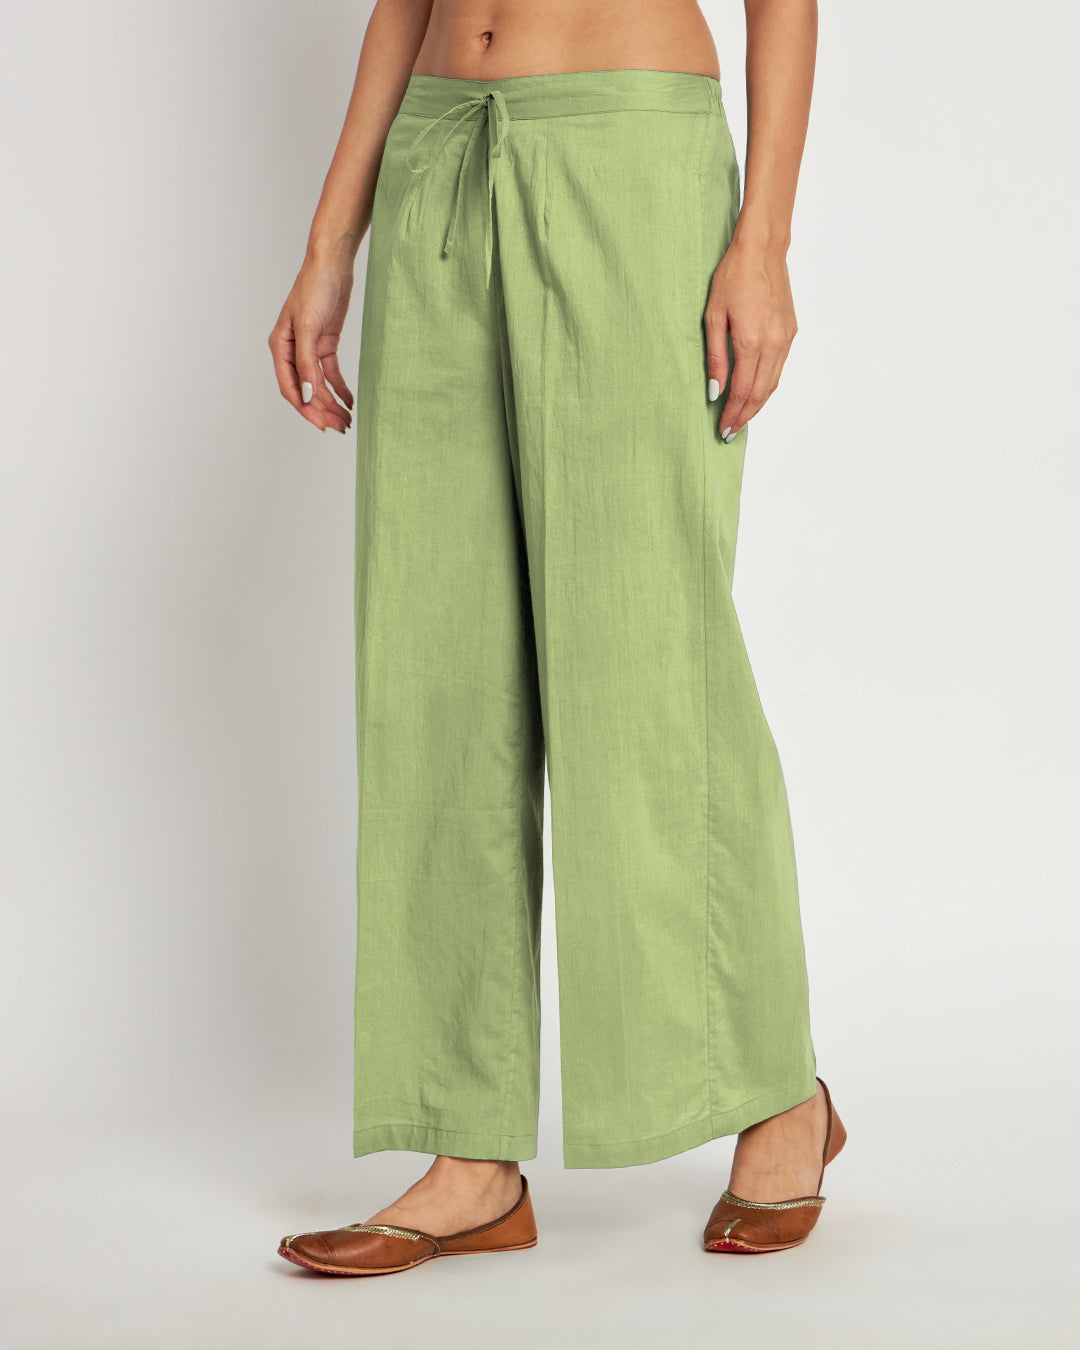 Combo: Beige & Sage Green Wide Pants- Set Of 2